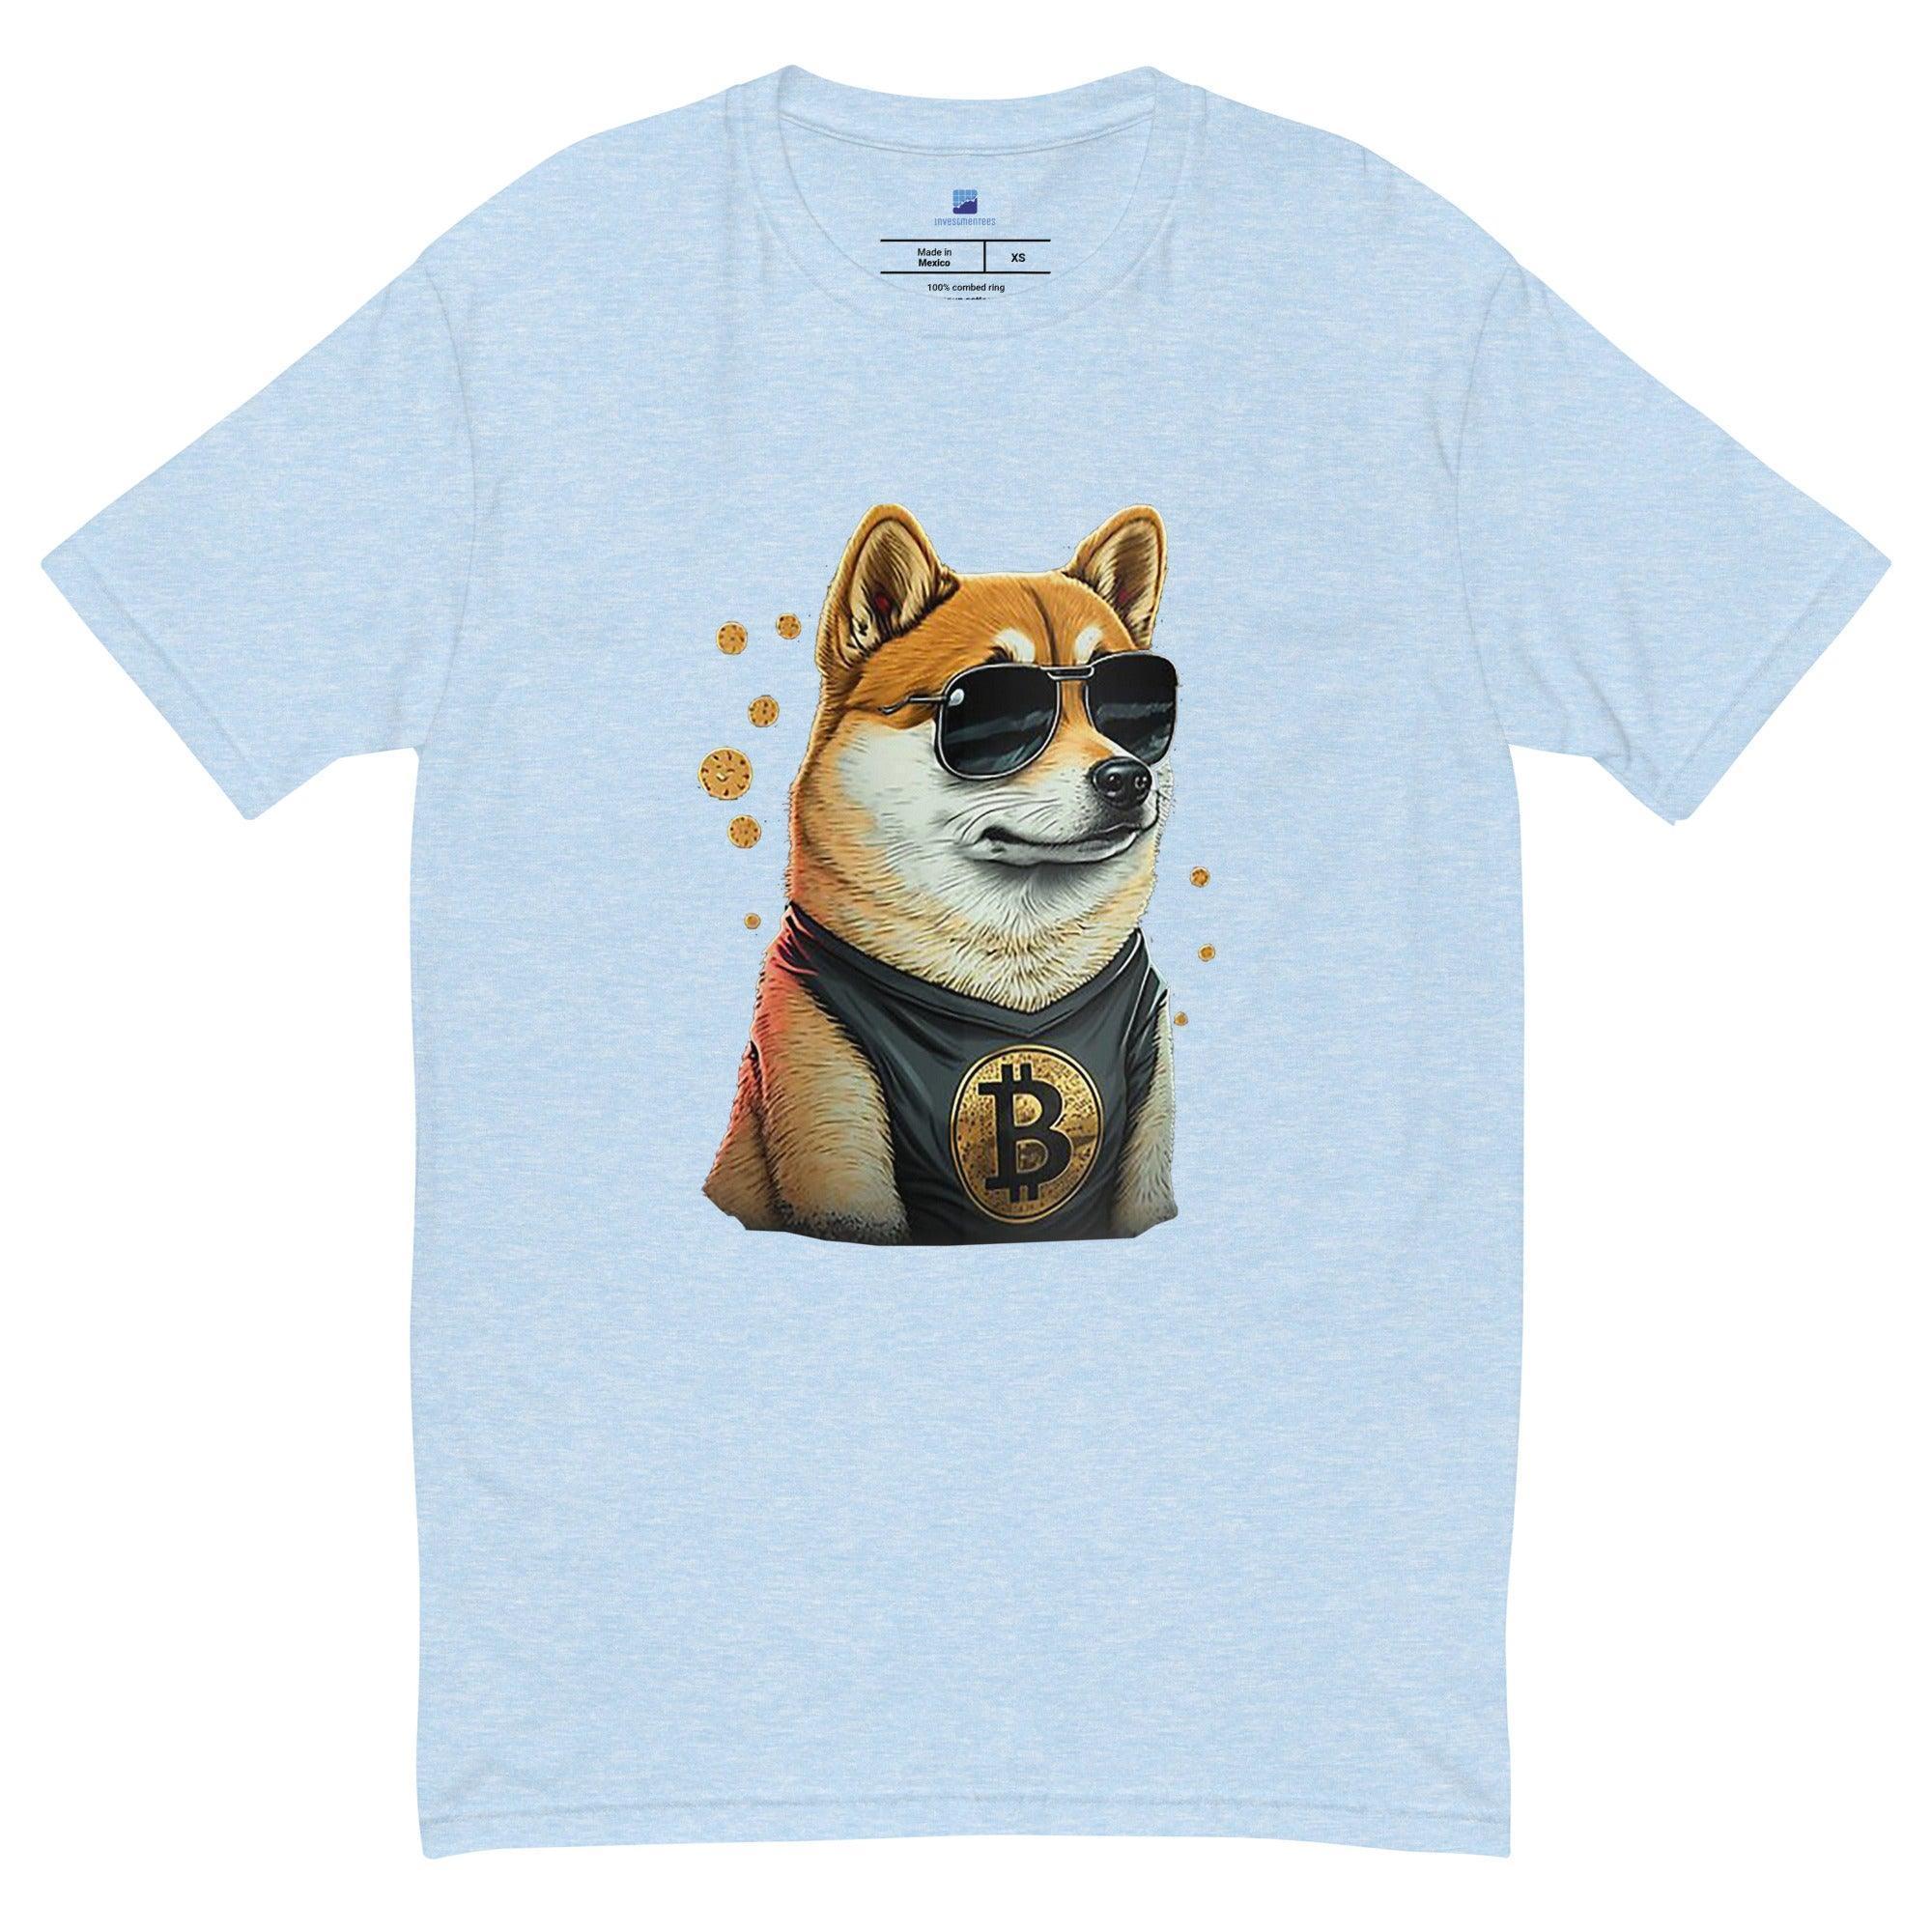 Bit-Shiba Crypto Dog T-Shirt - InvestmenTees